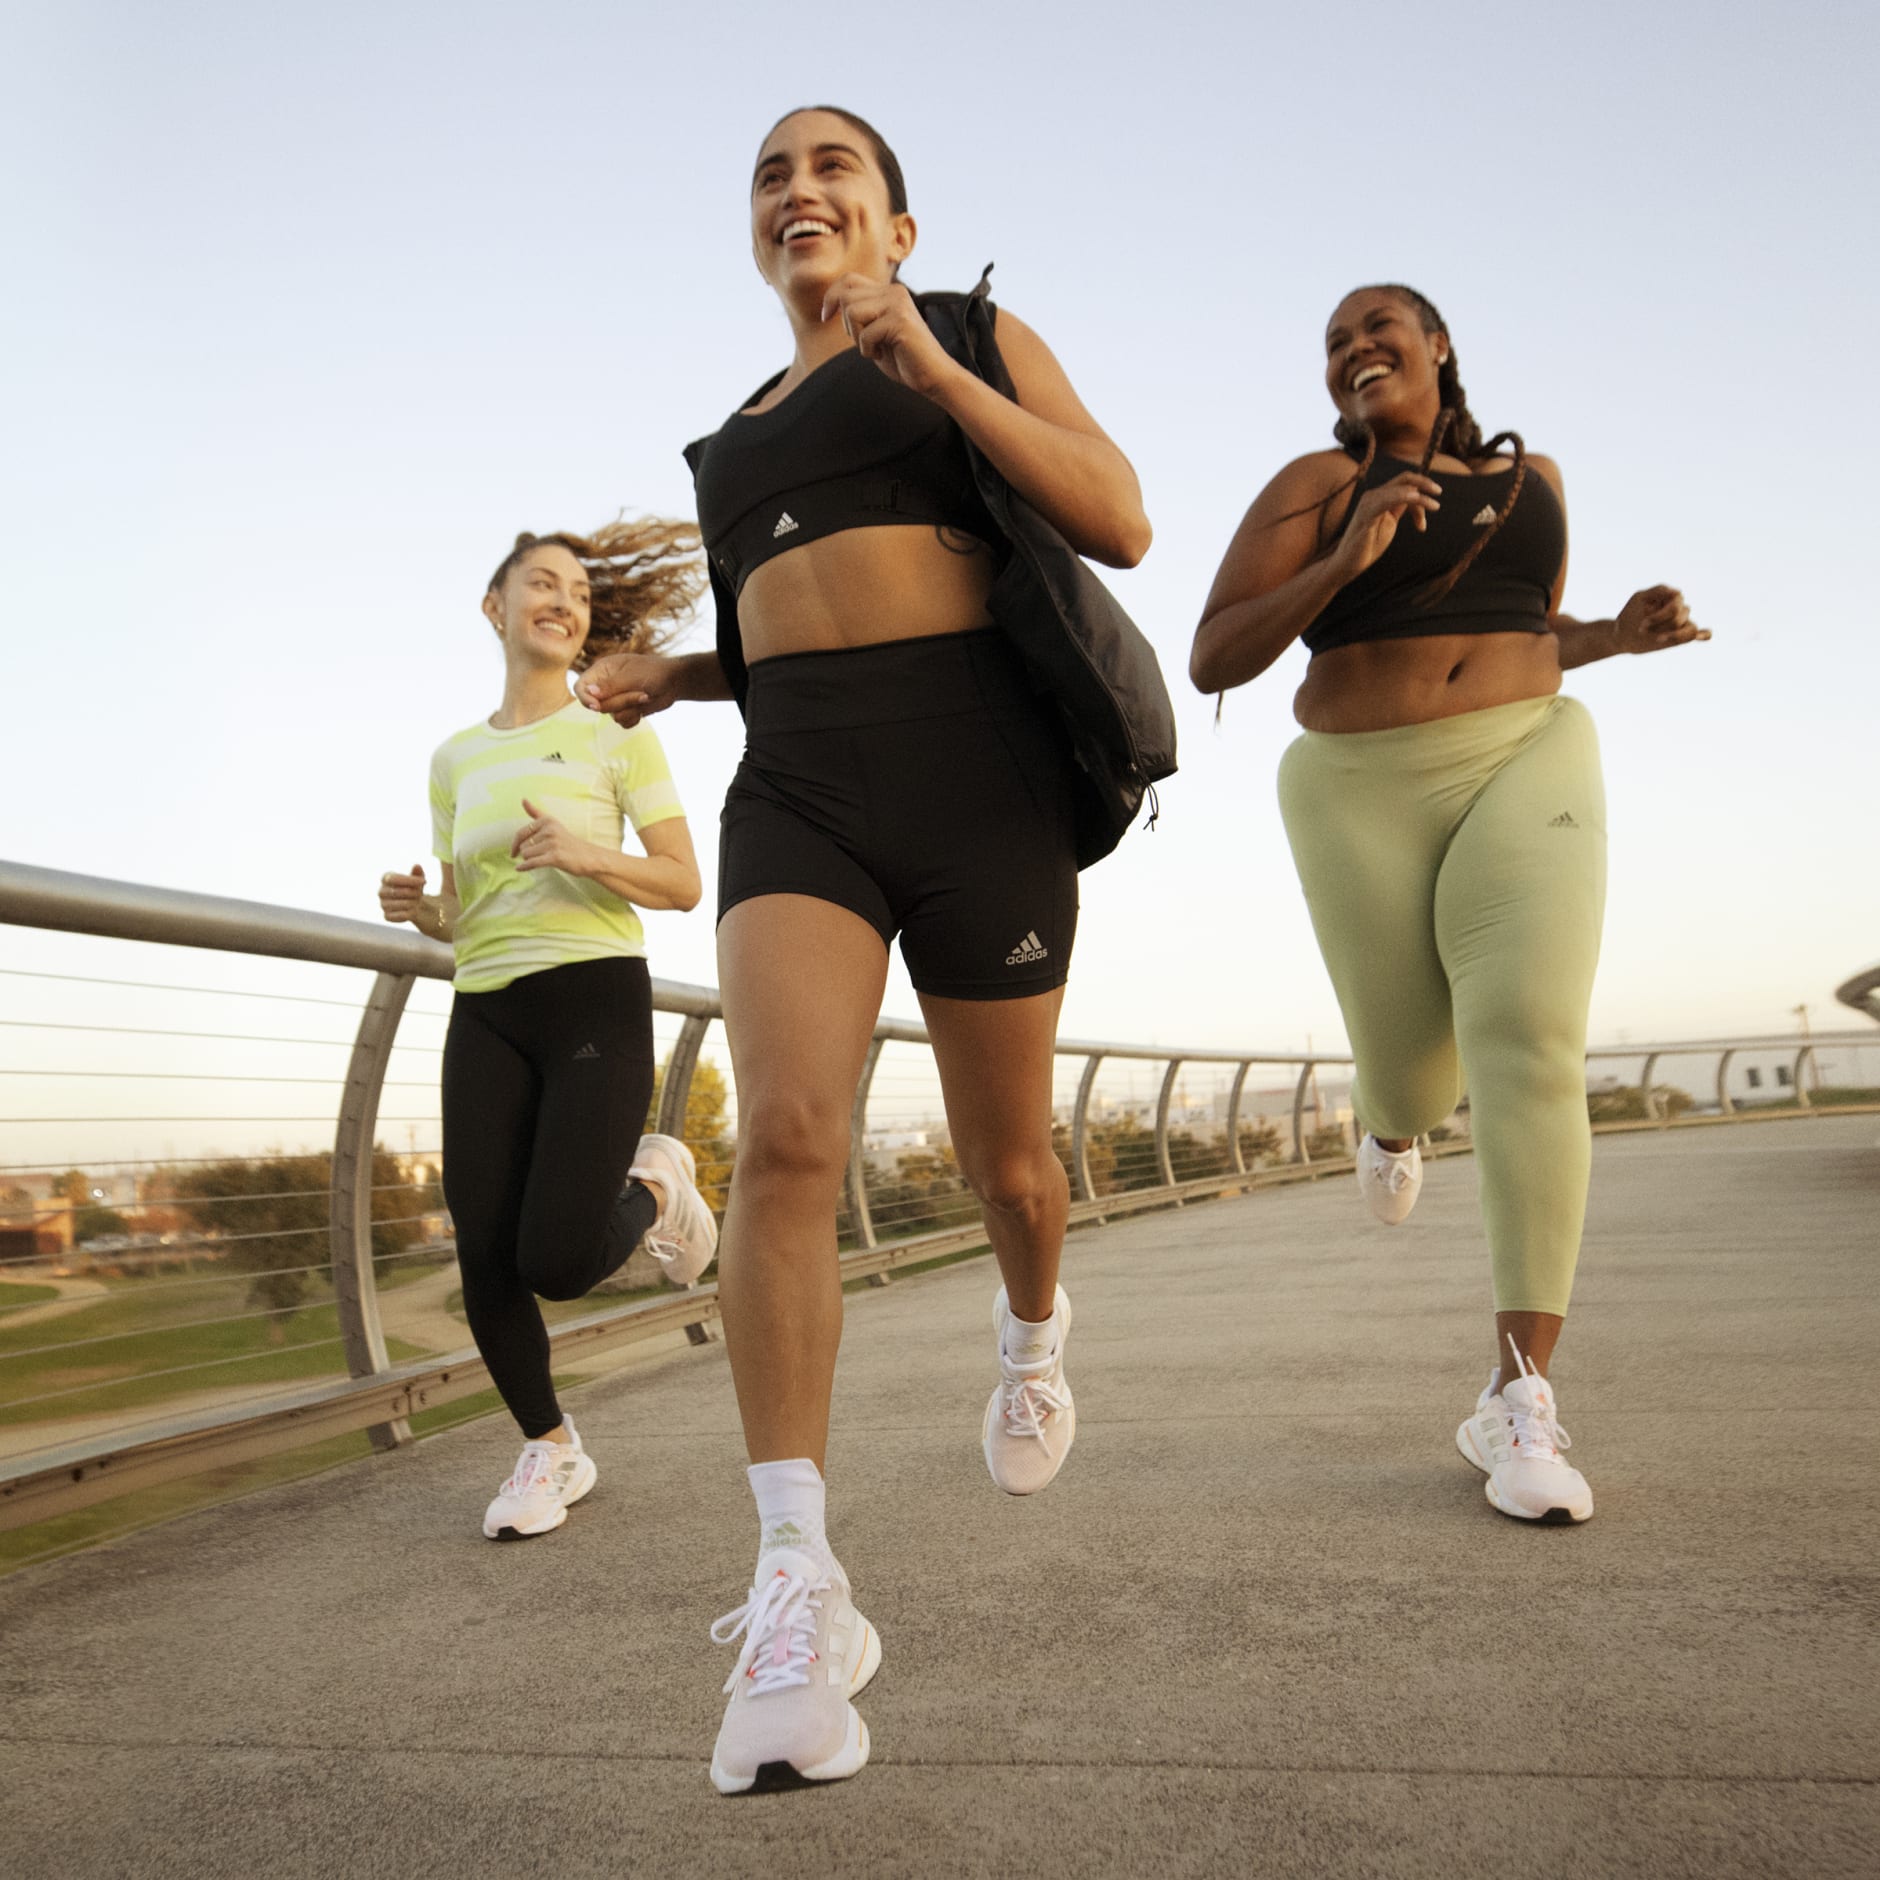 Women's Clothing - FastImpact Luxe Run High-Support Bra - White